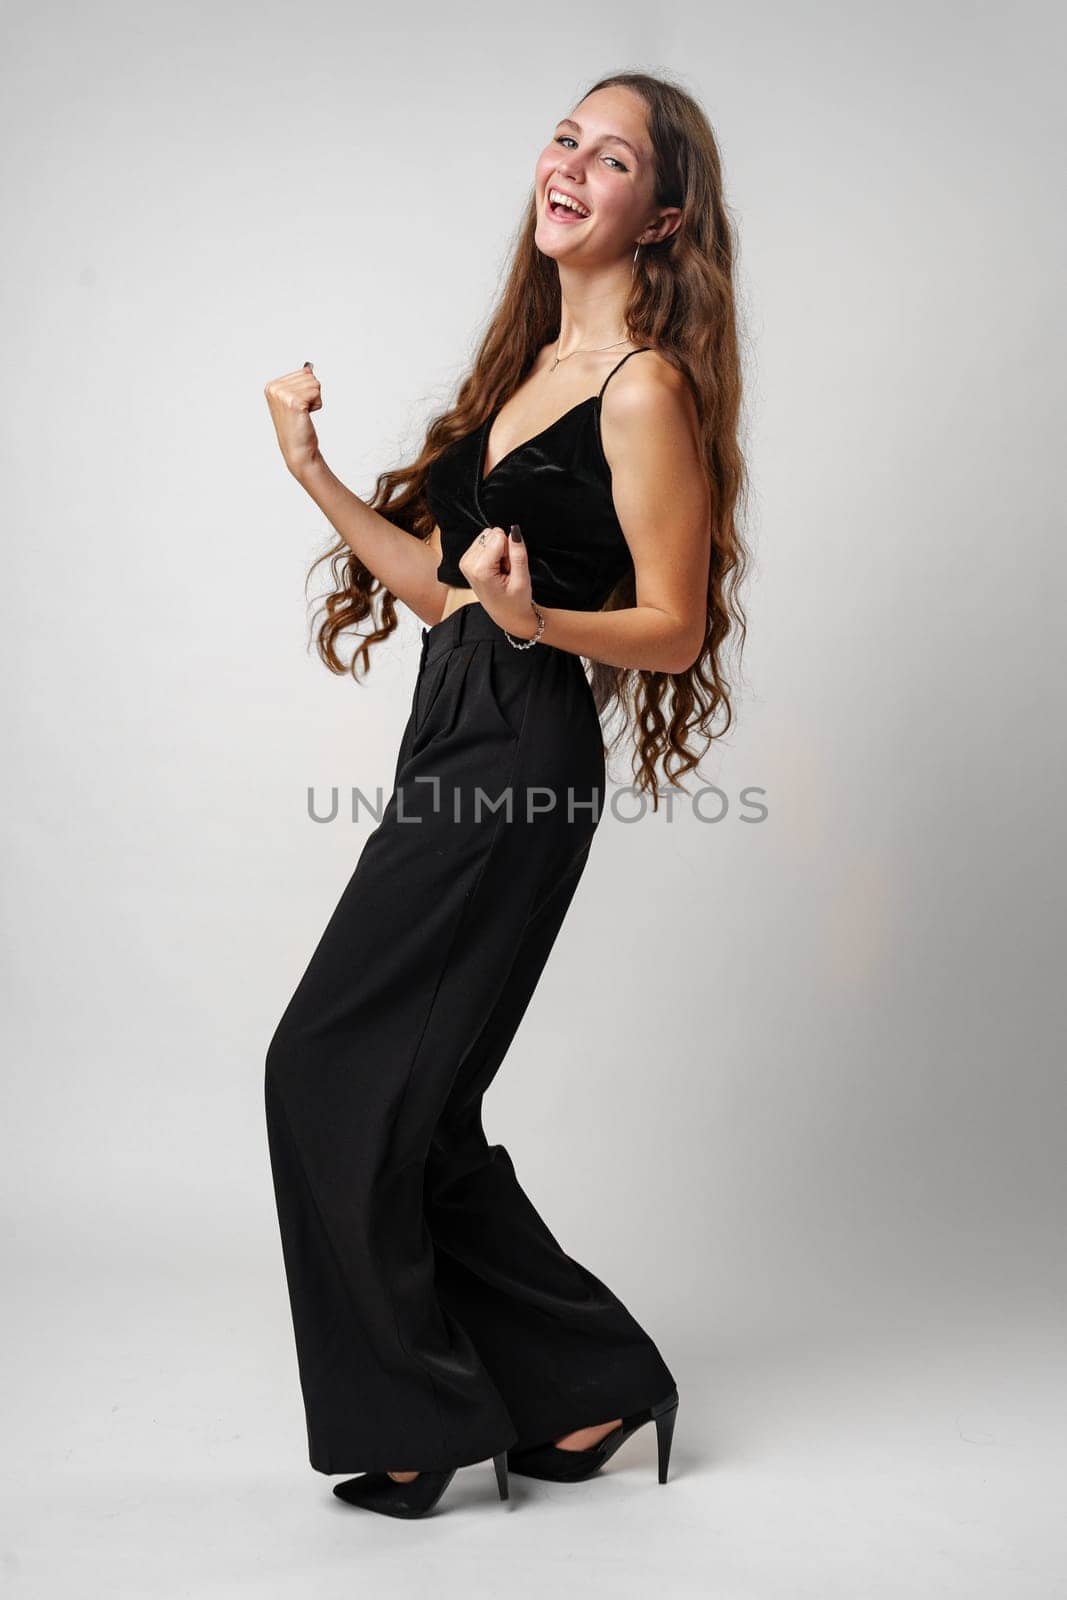 Radiant Young Woman in Elegant Black Dress Celebrating Joyfully by Fabrikasimf